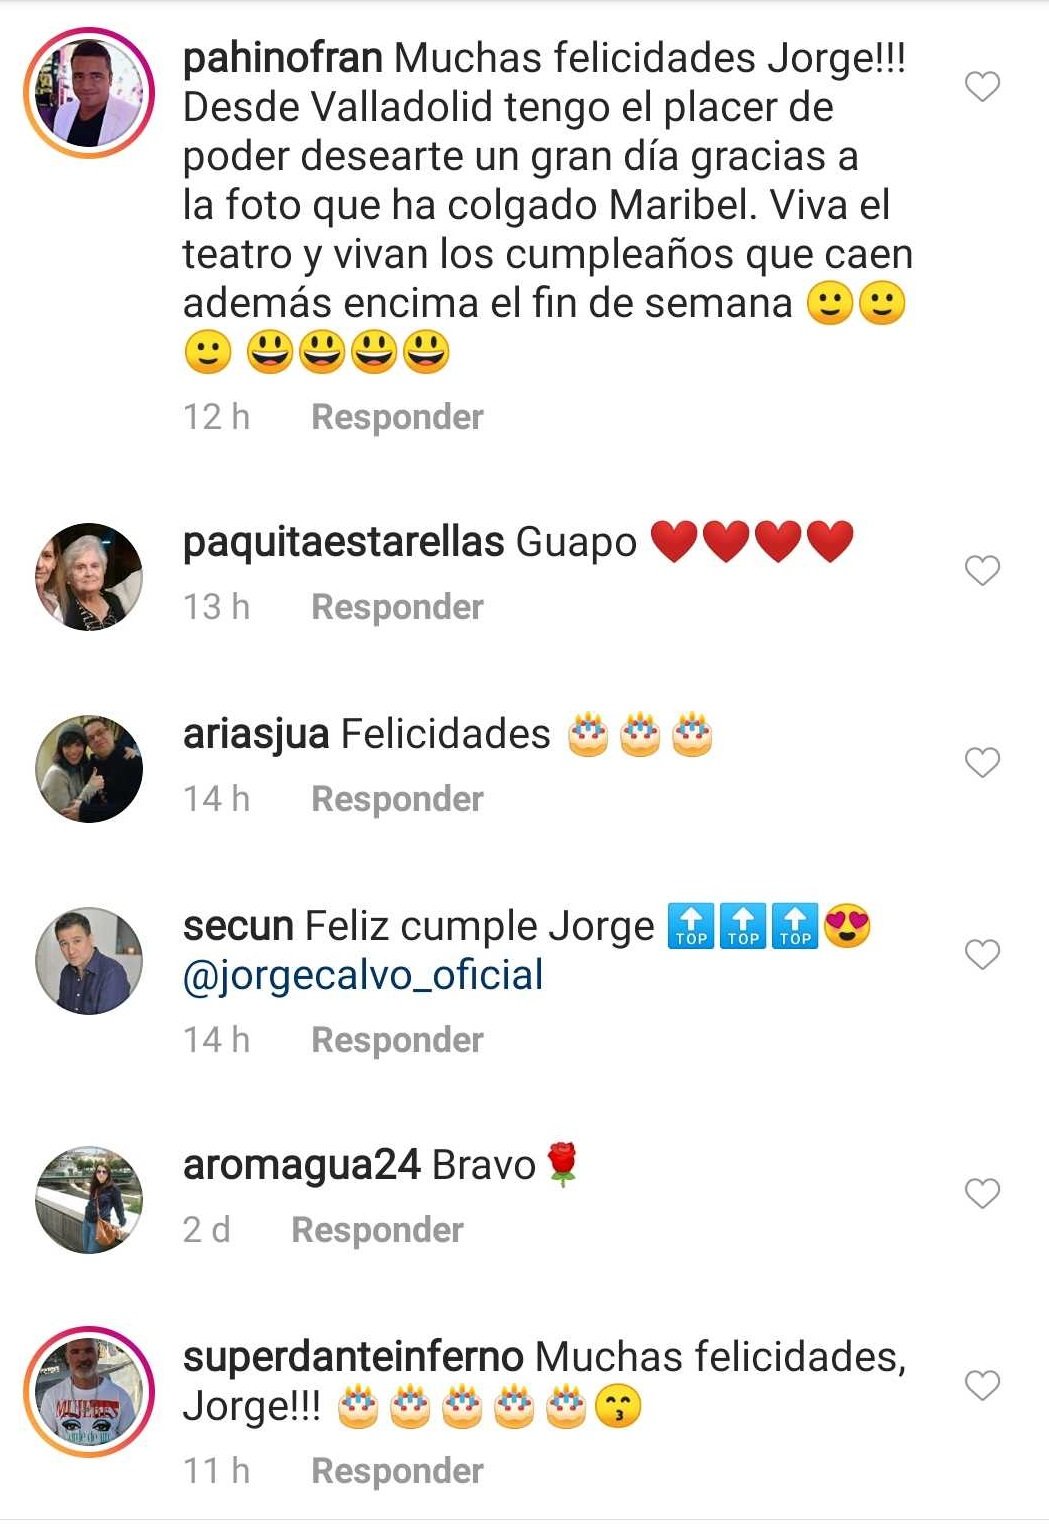 Comentarios de felicitación a Jorge Calvo. |Foto: instagram/jorgecalvo_oficial/